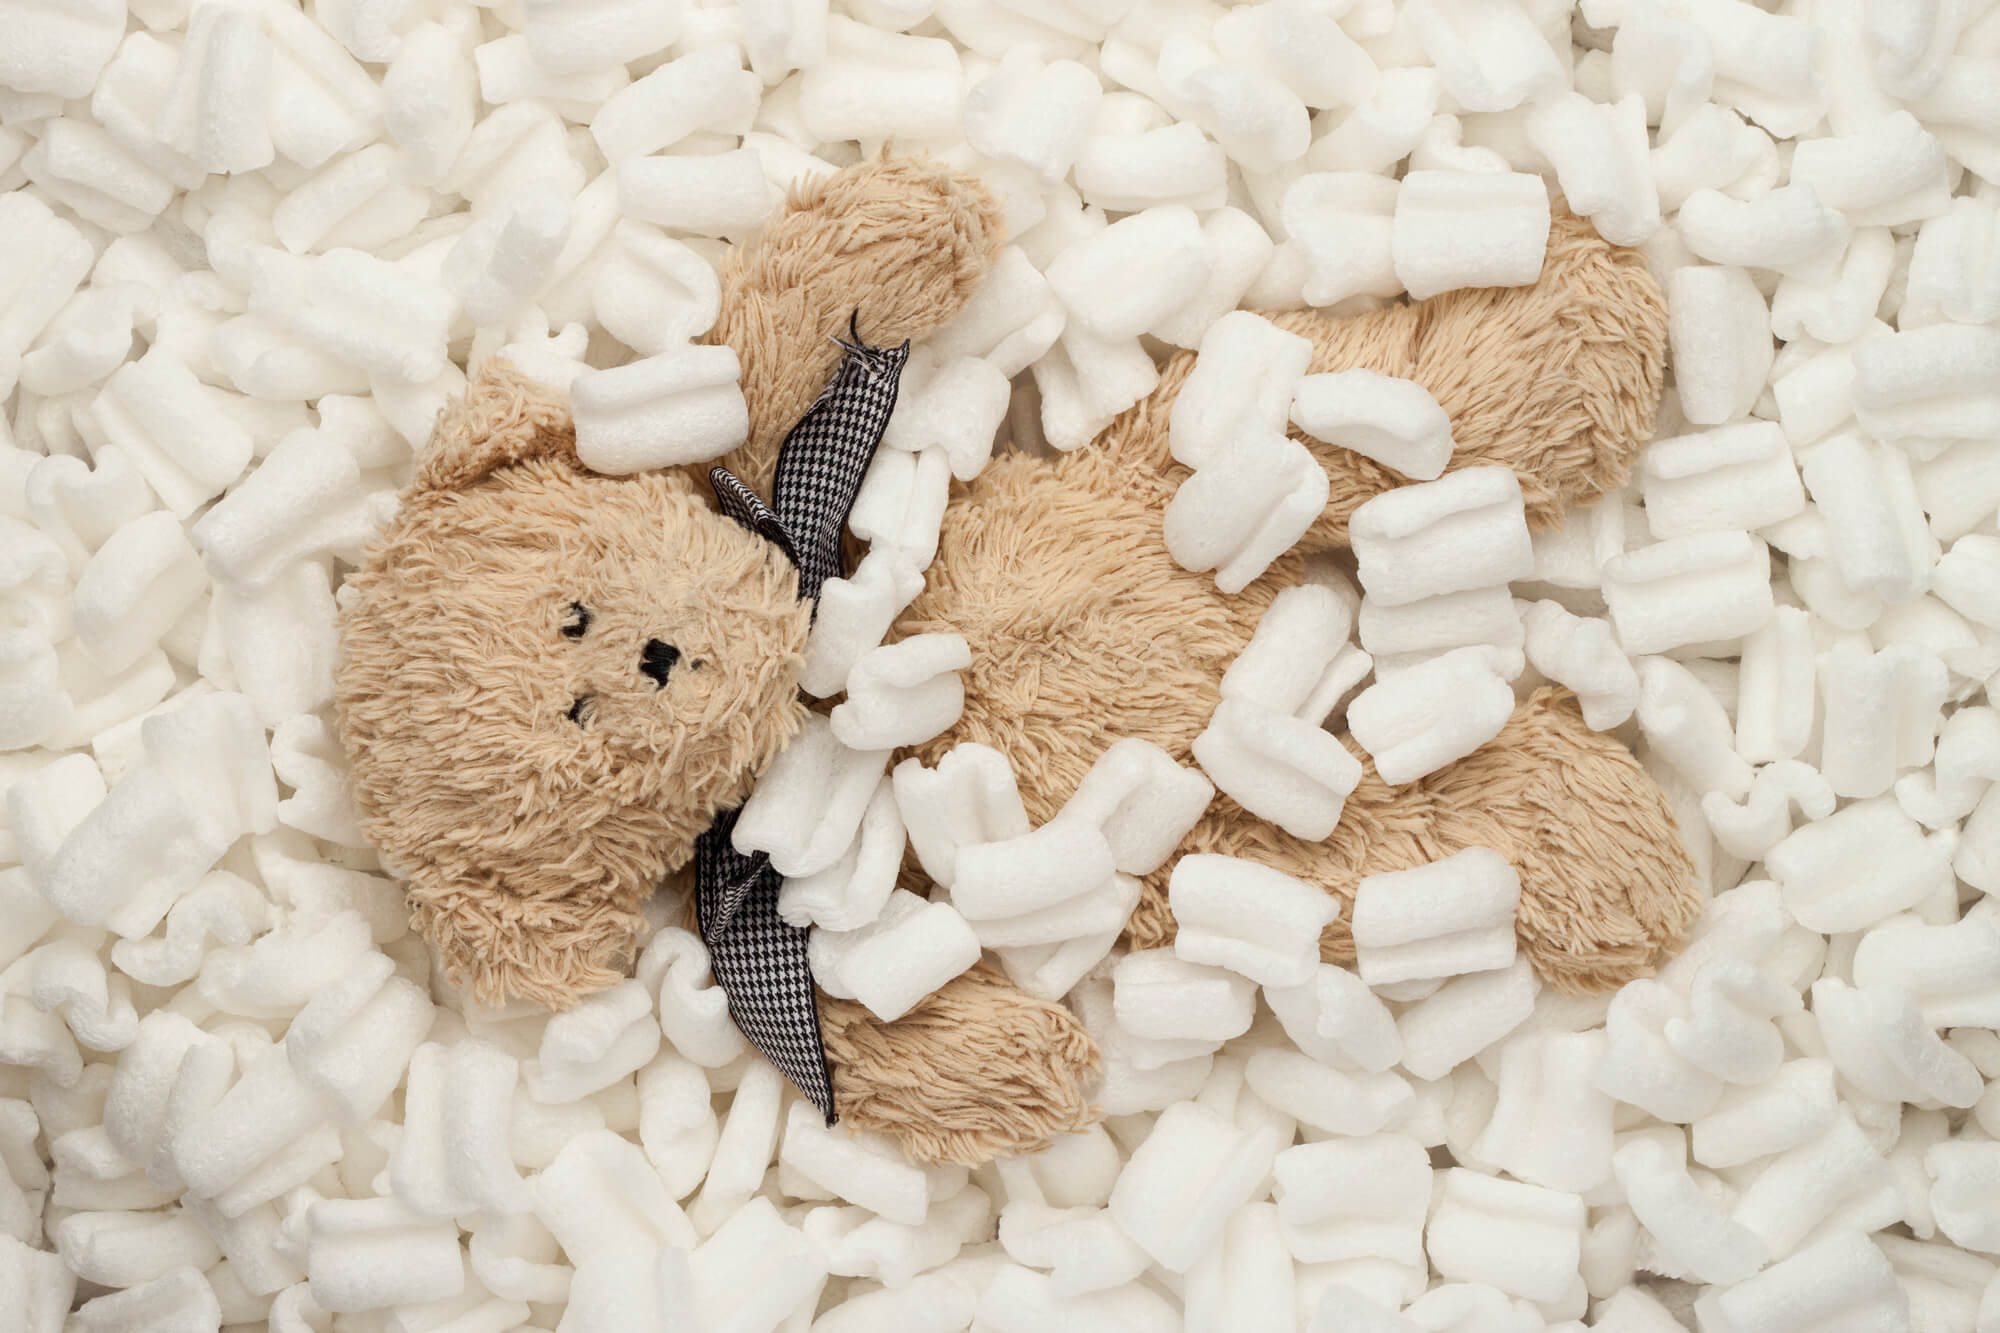 Teddy bear in styrofoam